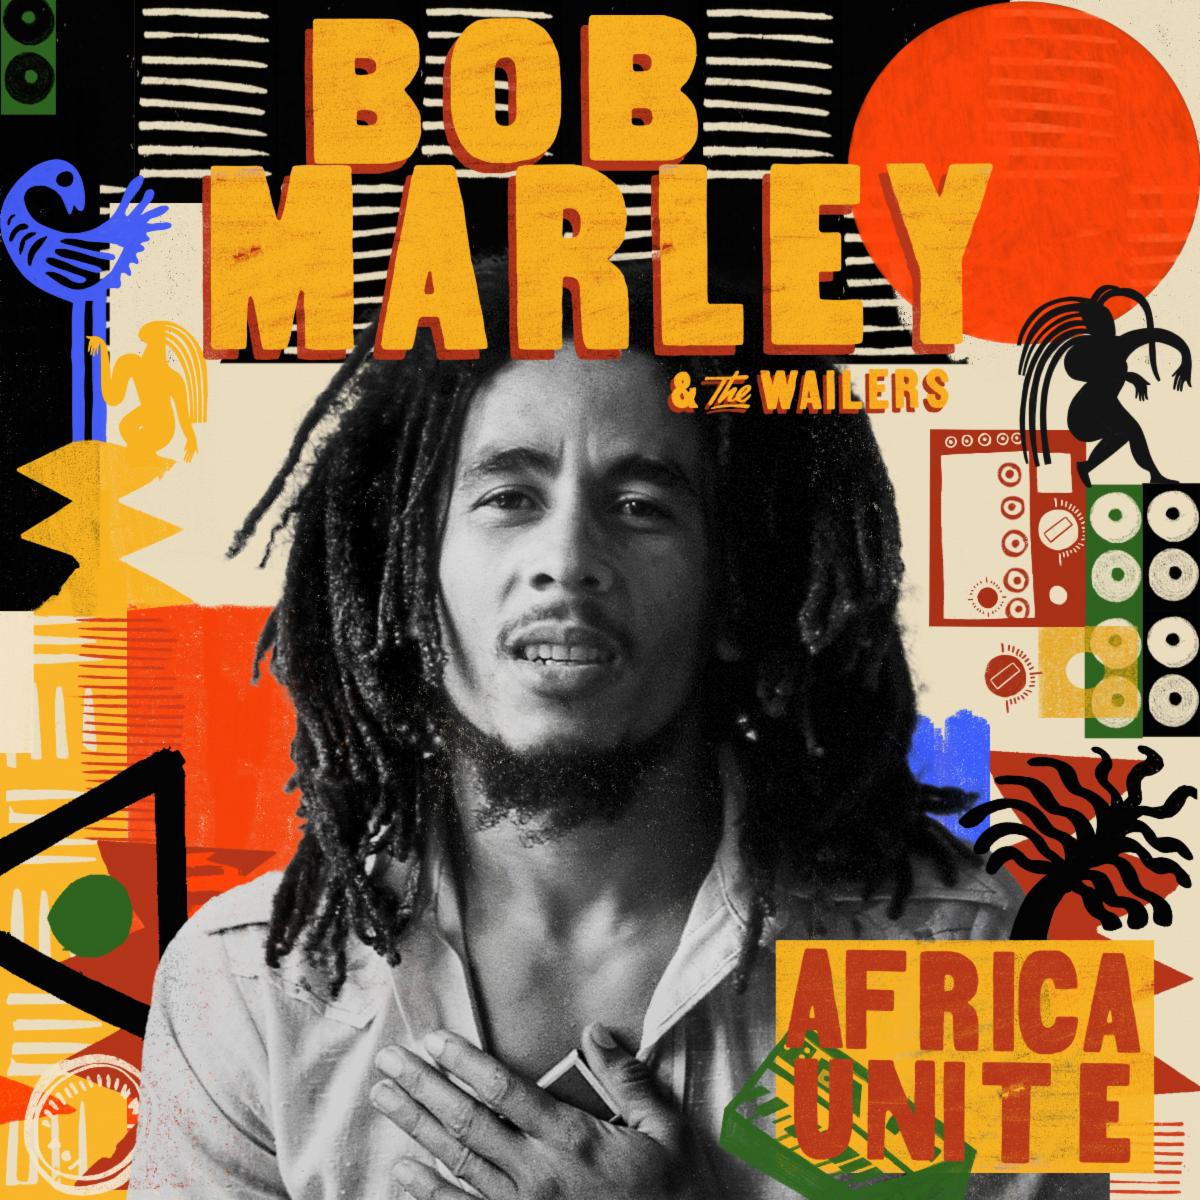 Bob Marley & The Wailers Release Posthumous Album “Africa Unite”